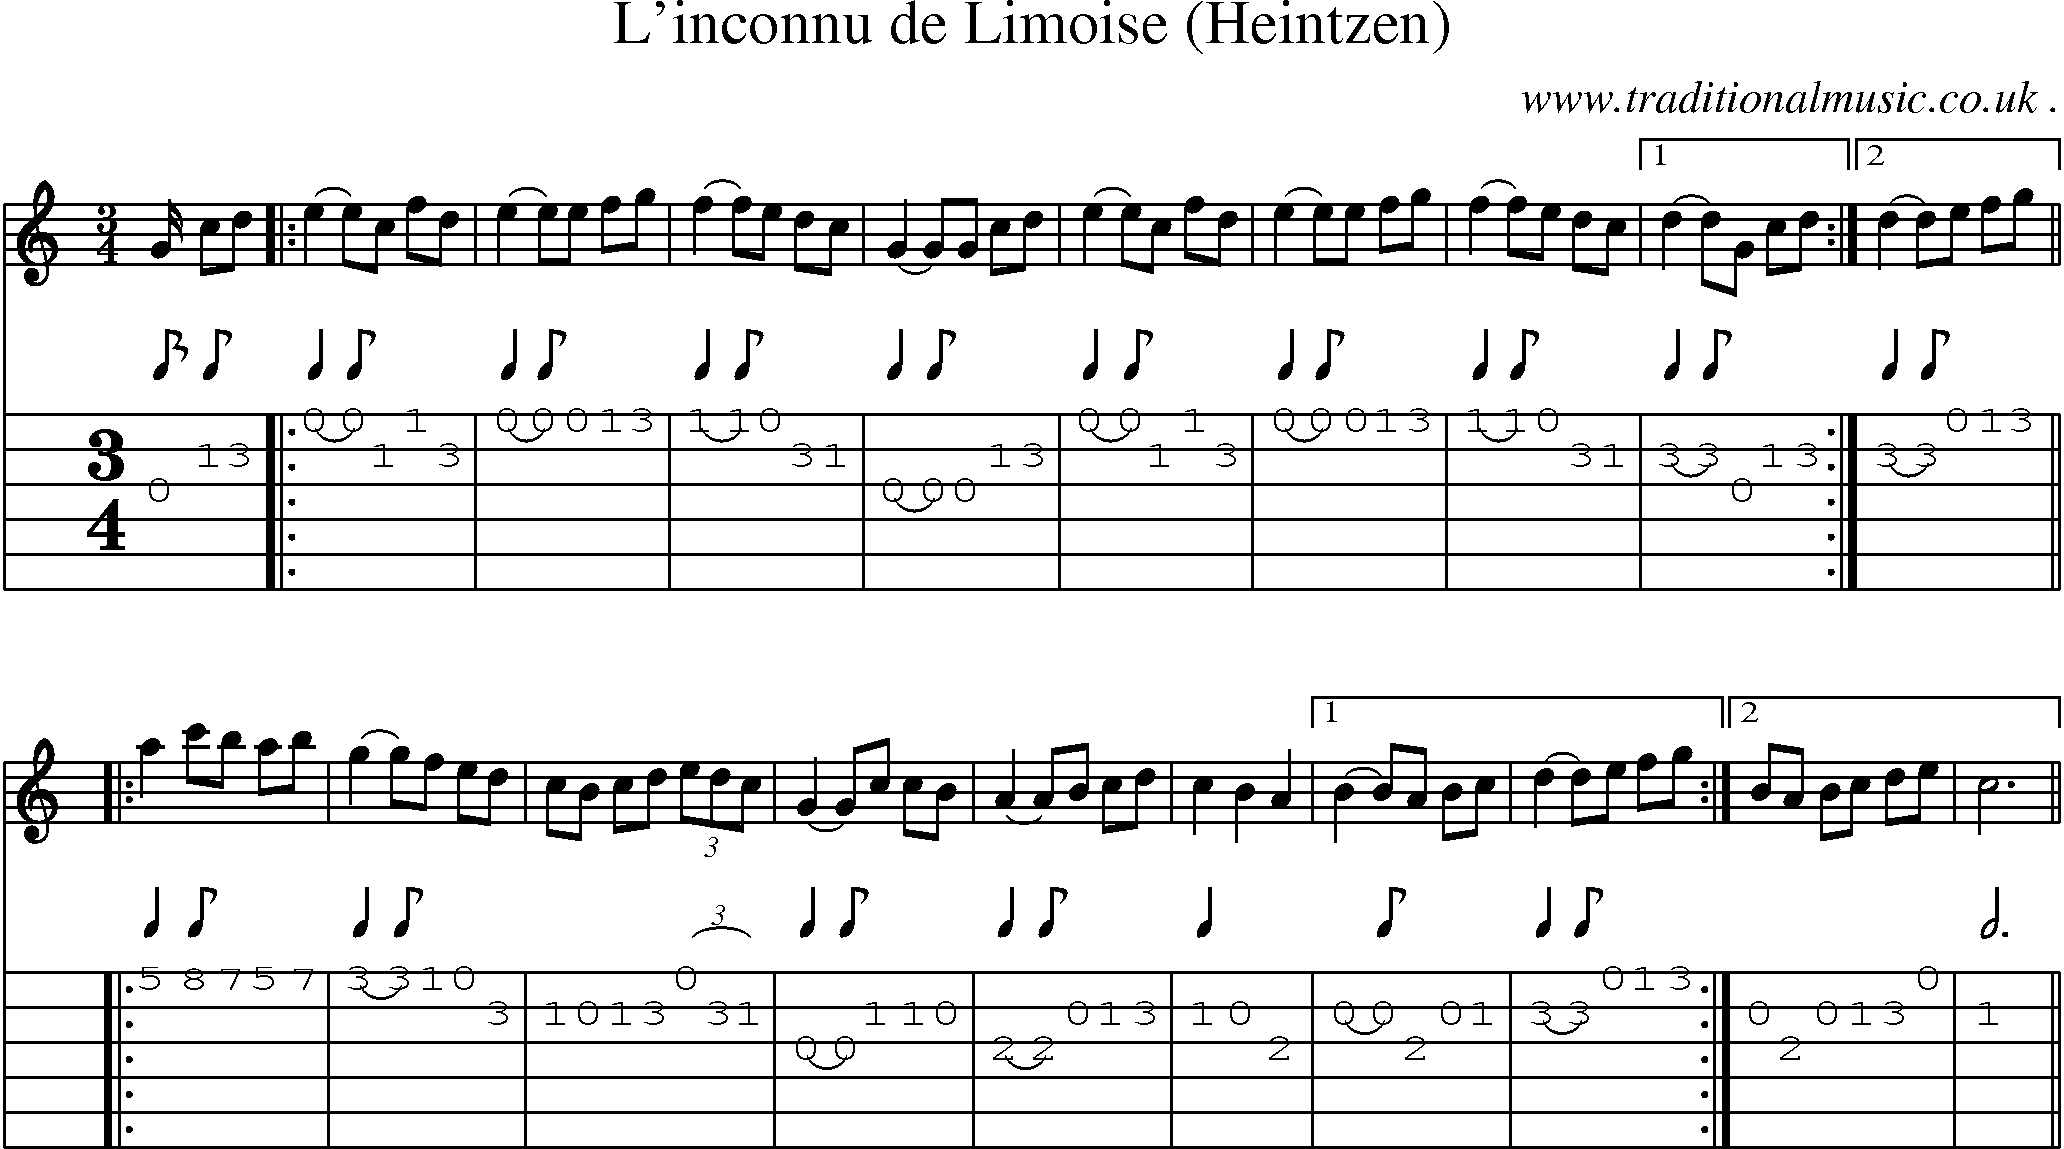 Sheet-Music and Guitar Tabs for Linconnu De Limoise (heintzen)